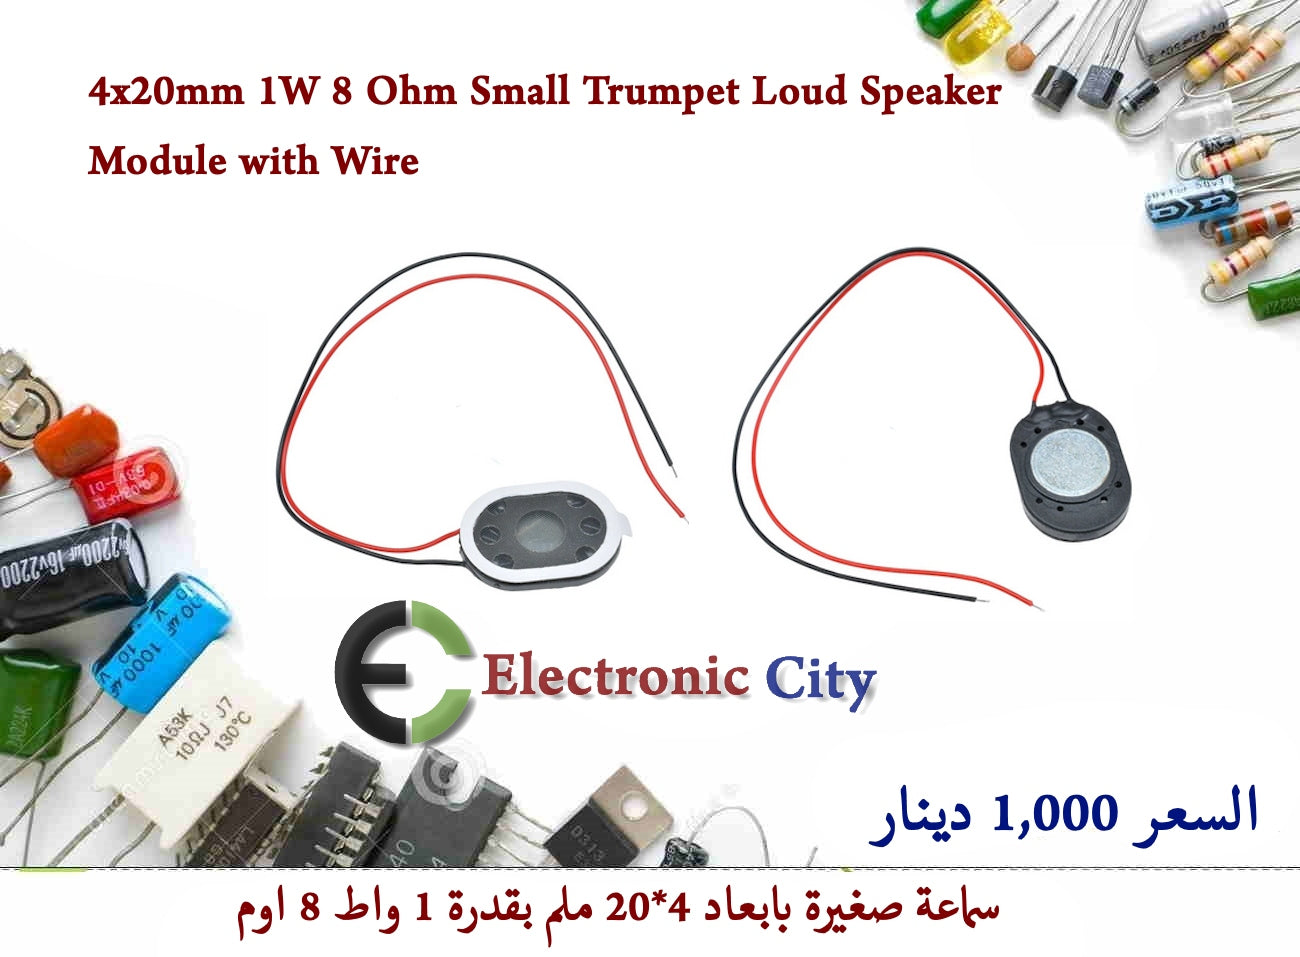 4x20mm 1W 8 Ohm Small Trumpet Loud Speaker Module with Wire   0503005